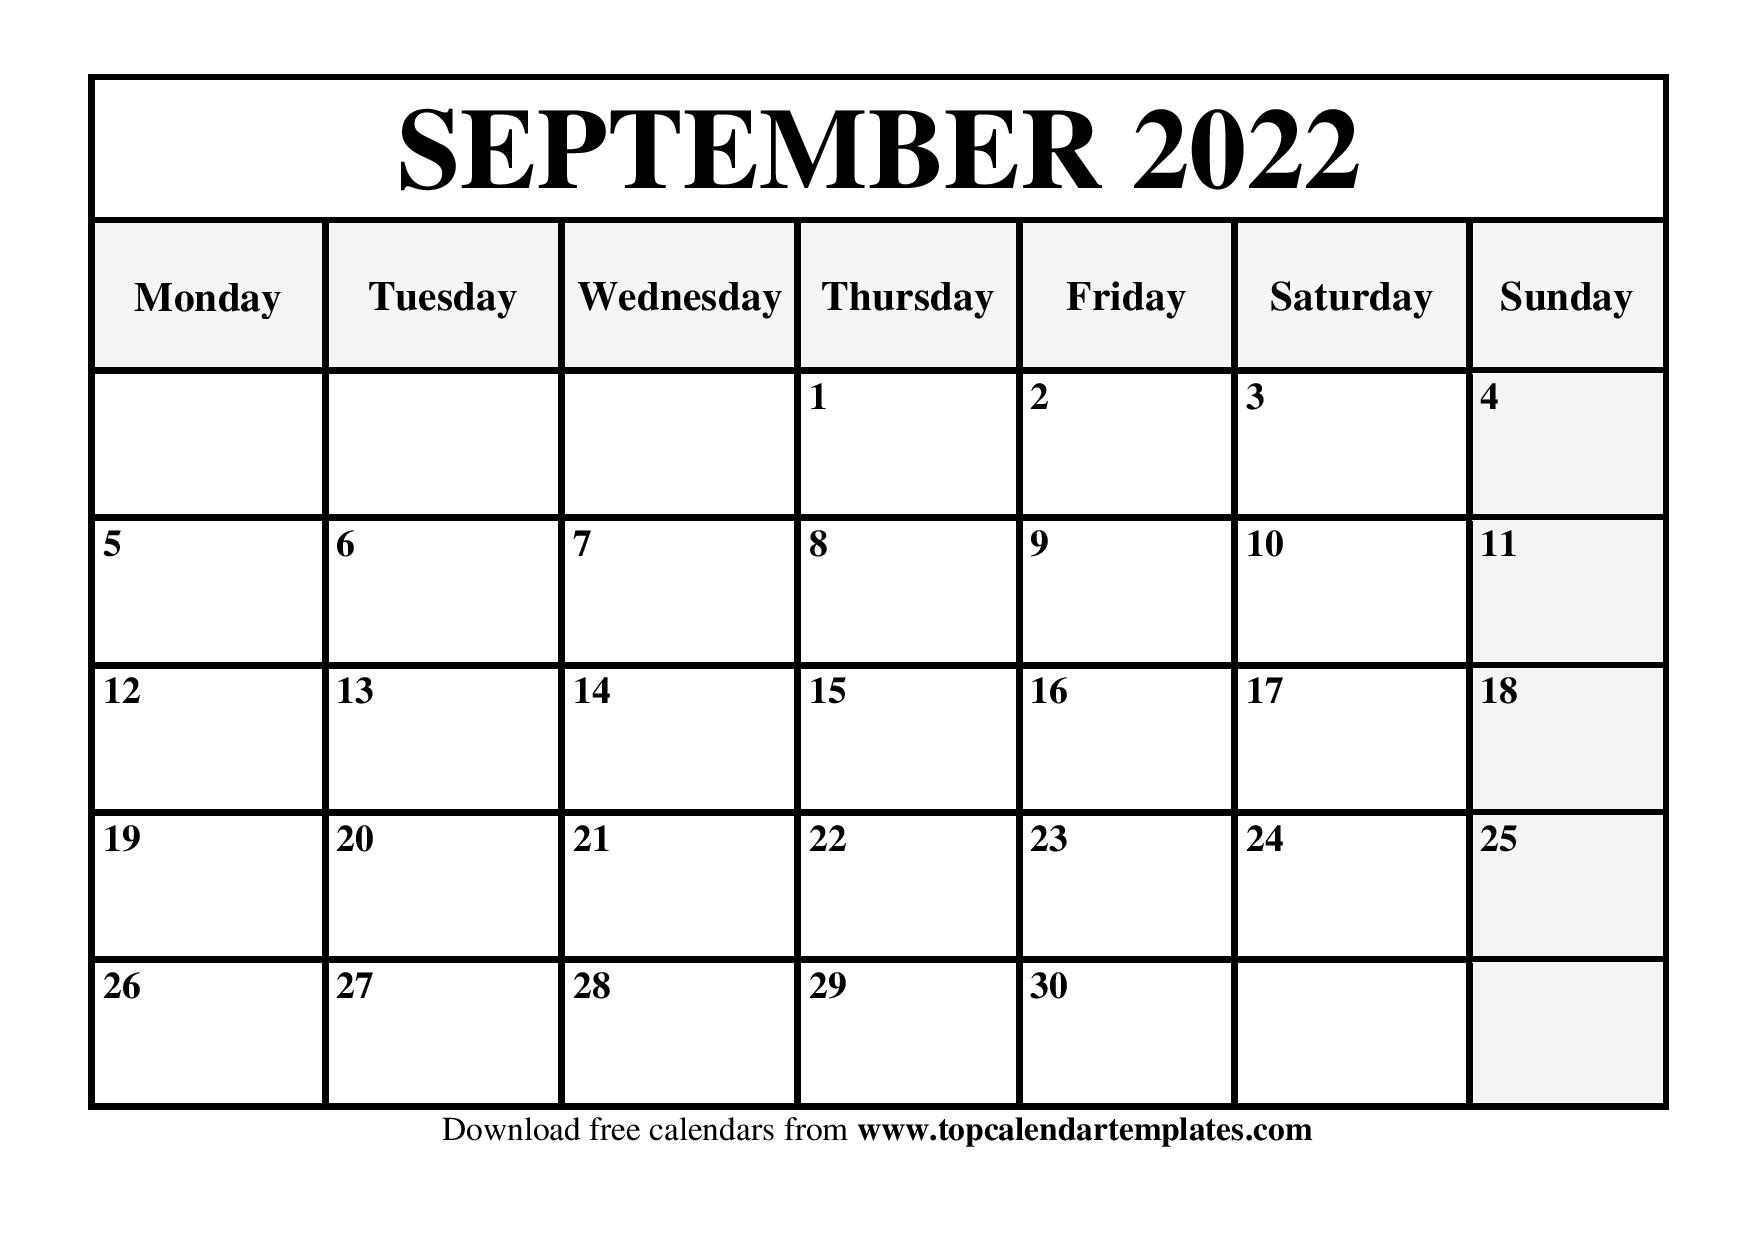 September 2022 Blank Calendar Printable Calendar September 2022 Templates - Pdf, Word, Excel